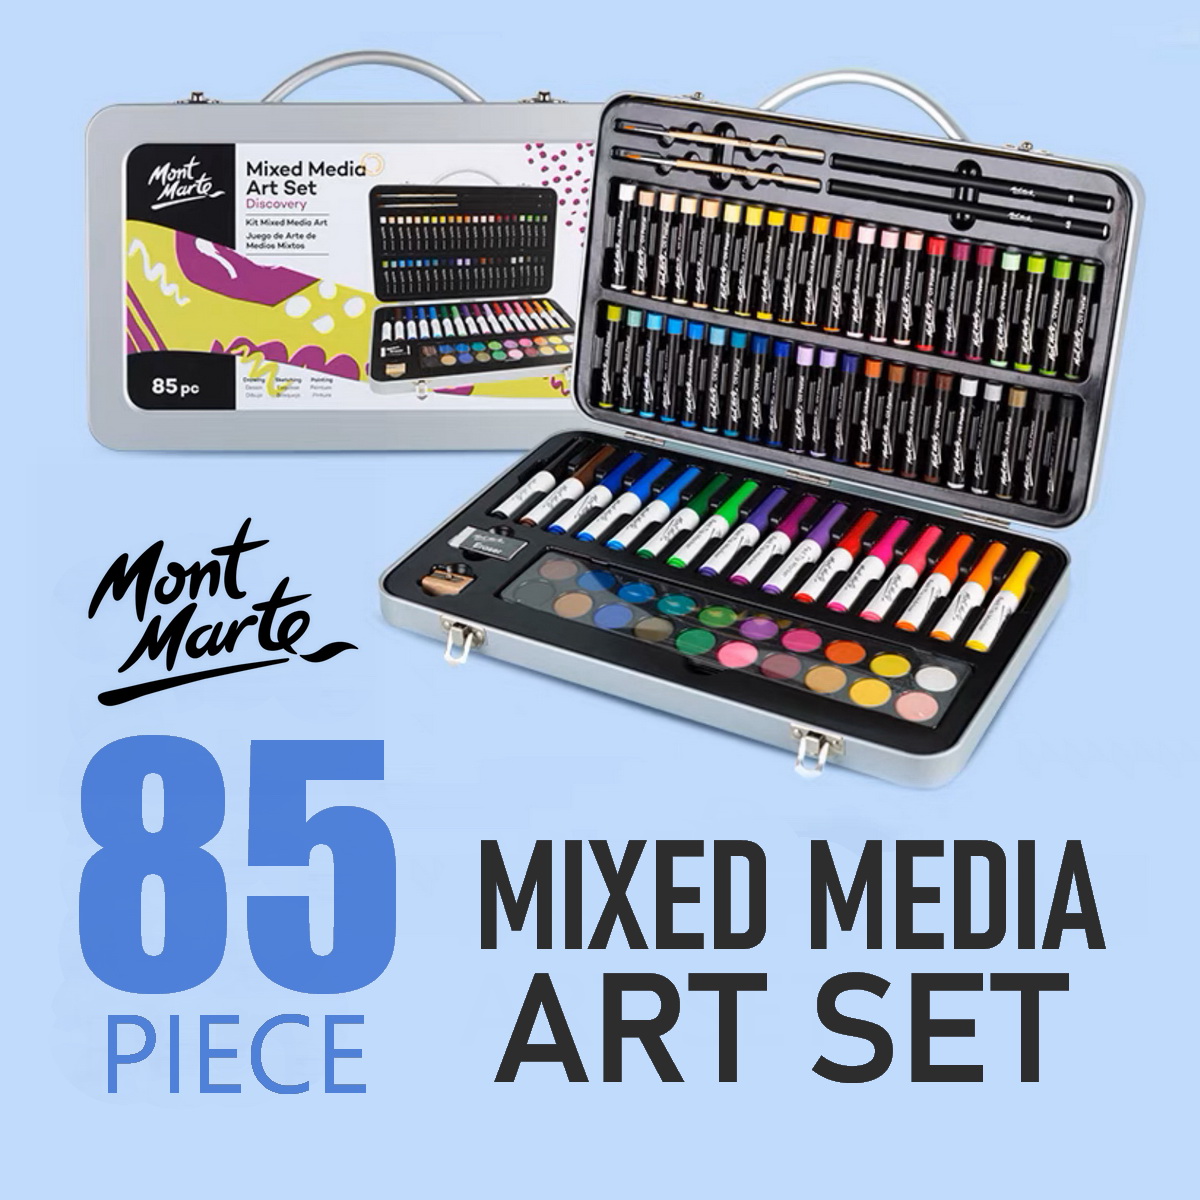 The Biggest Art Set for Students - Mont Marte Mixed Media Art Set